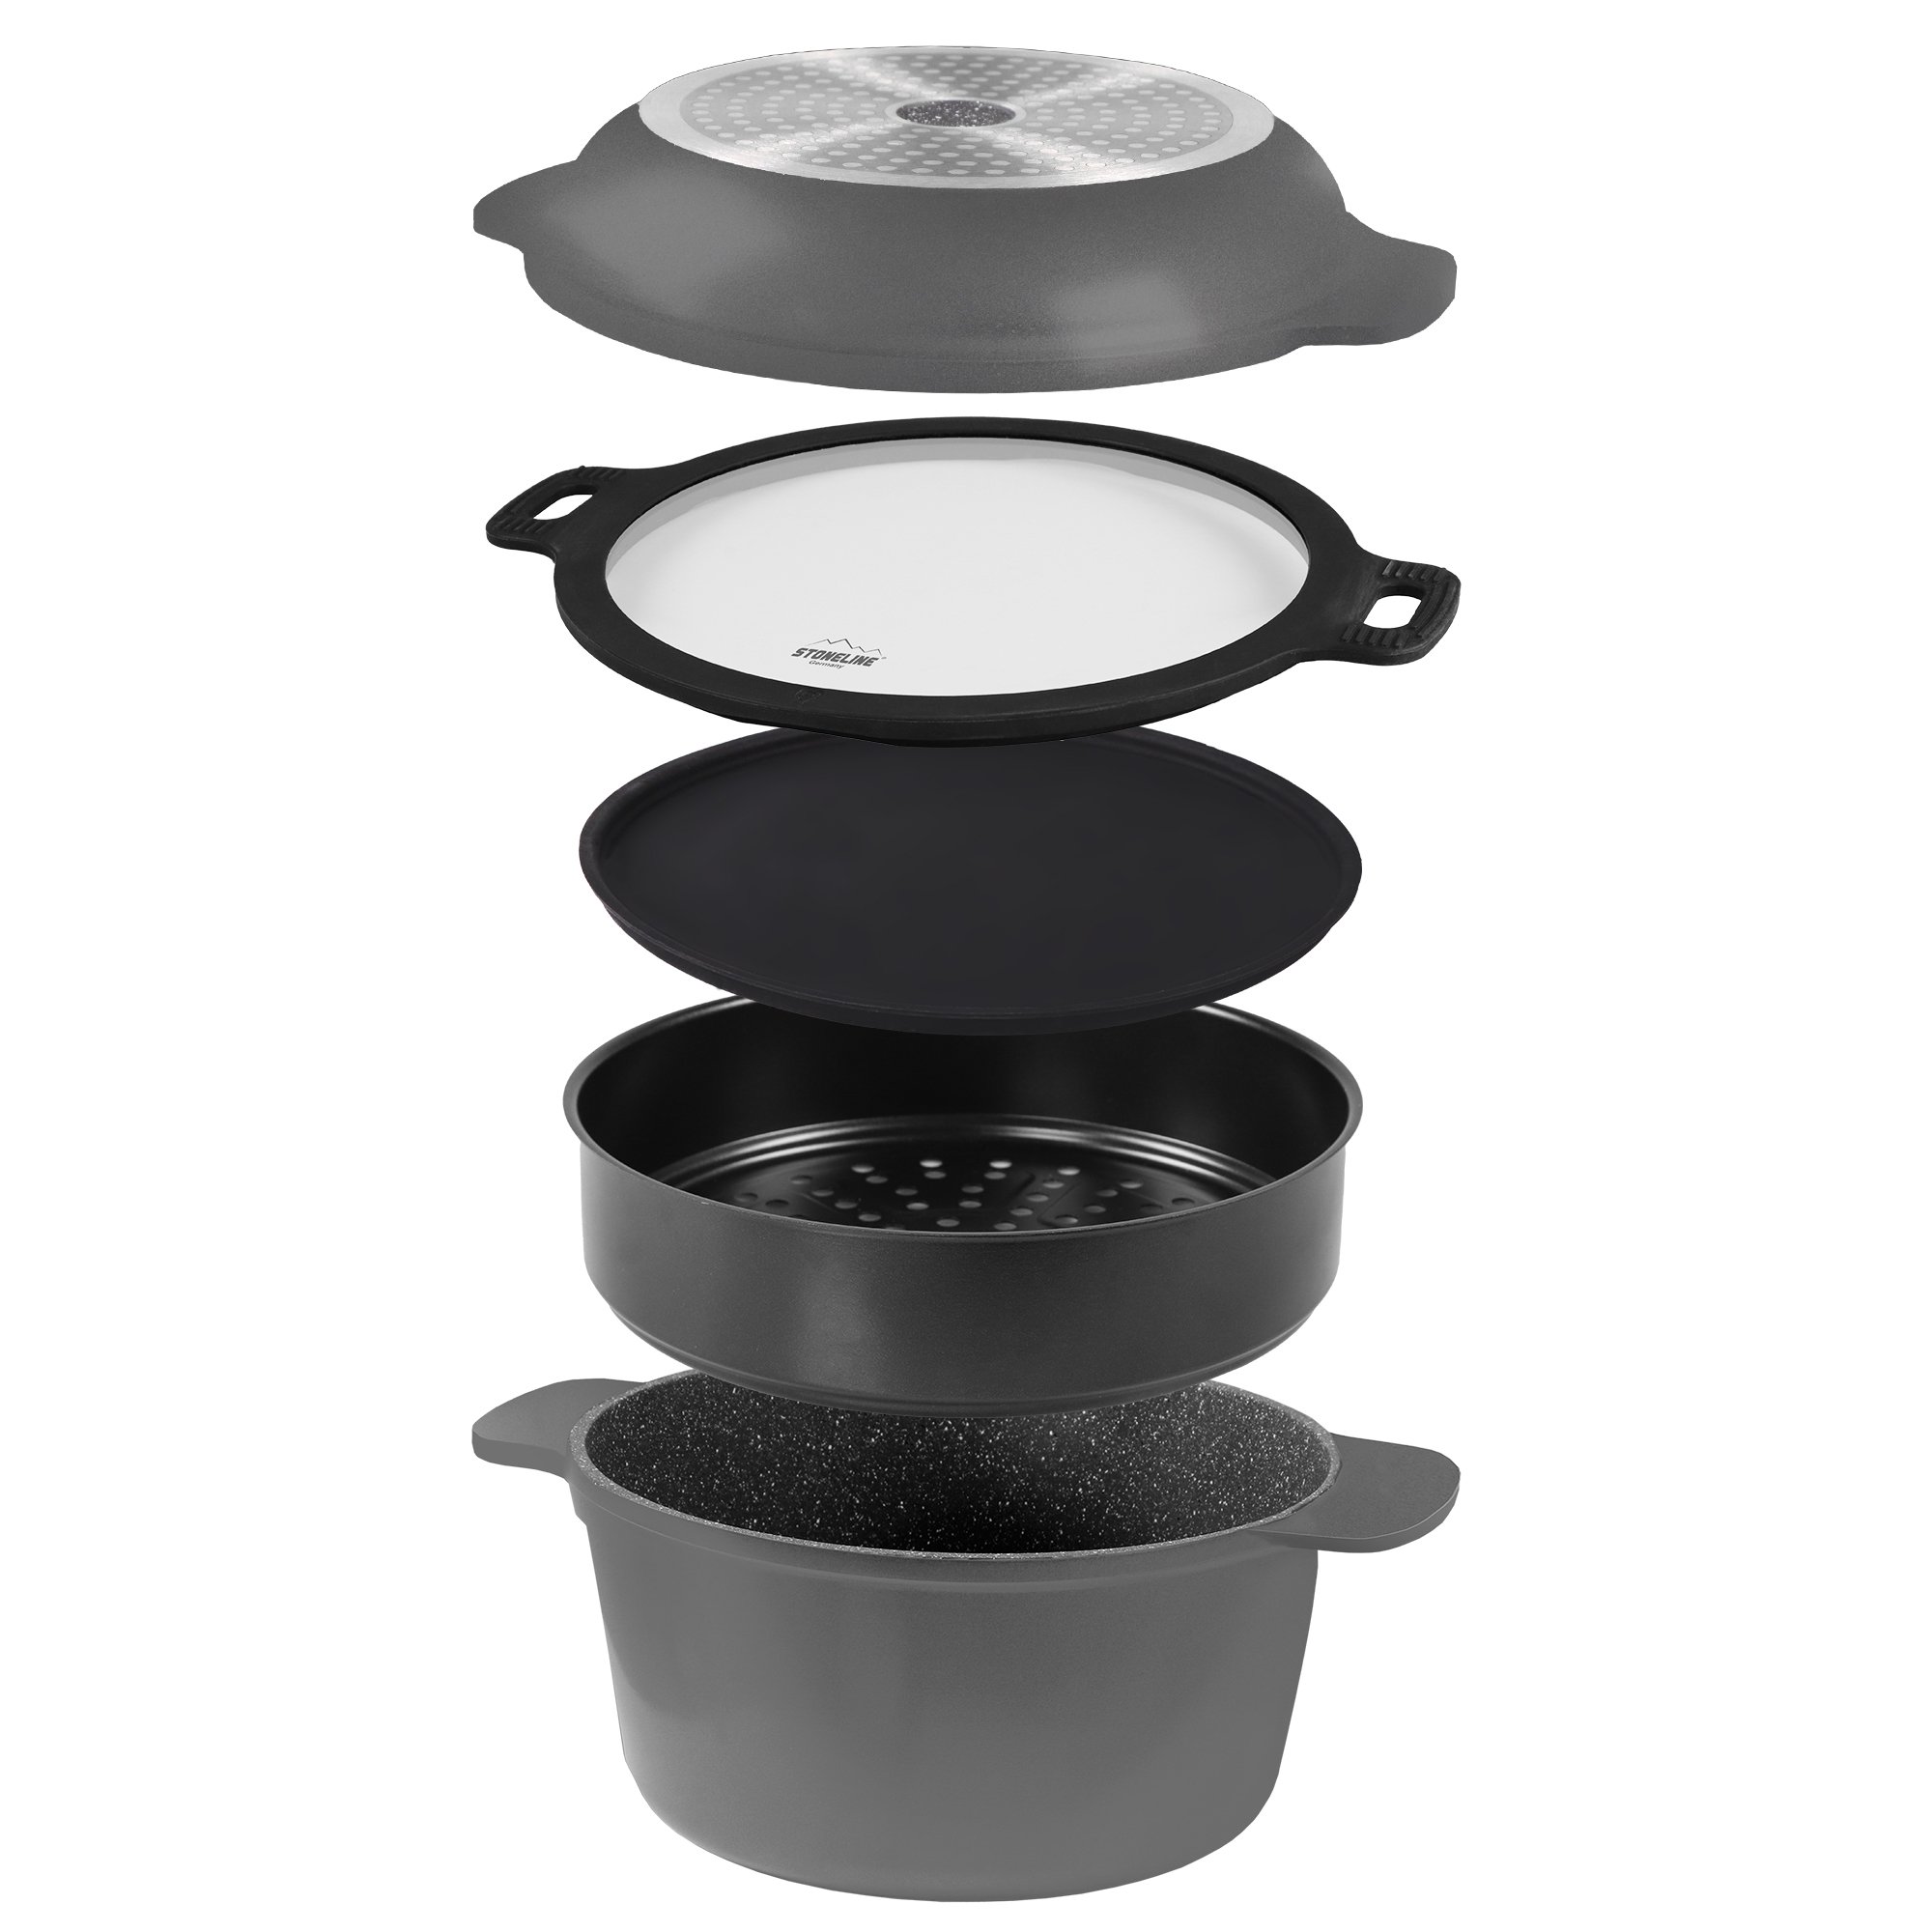 STONELINE® 5 pc Cookware Bakeware Set, with Lid, Non-Stick Pot Baking Tin Serving Pan